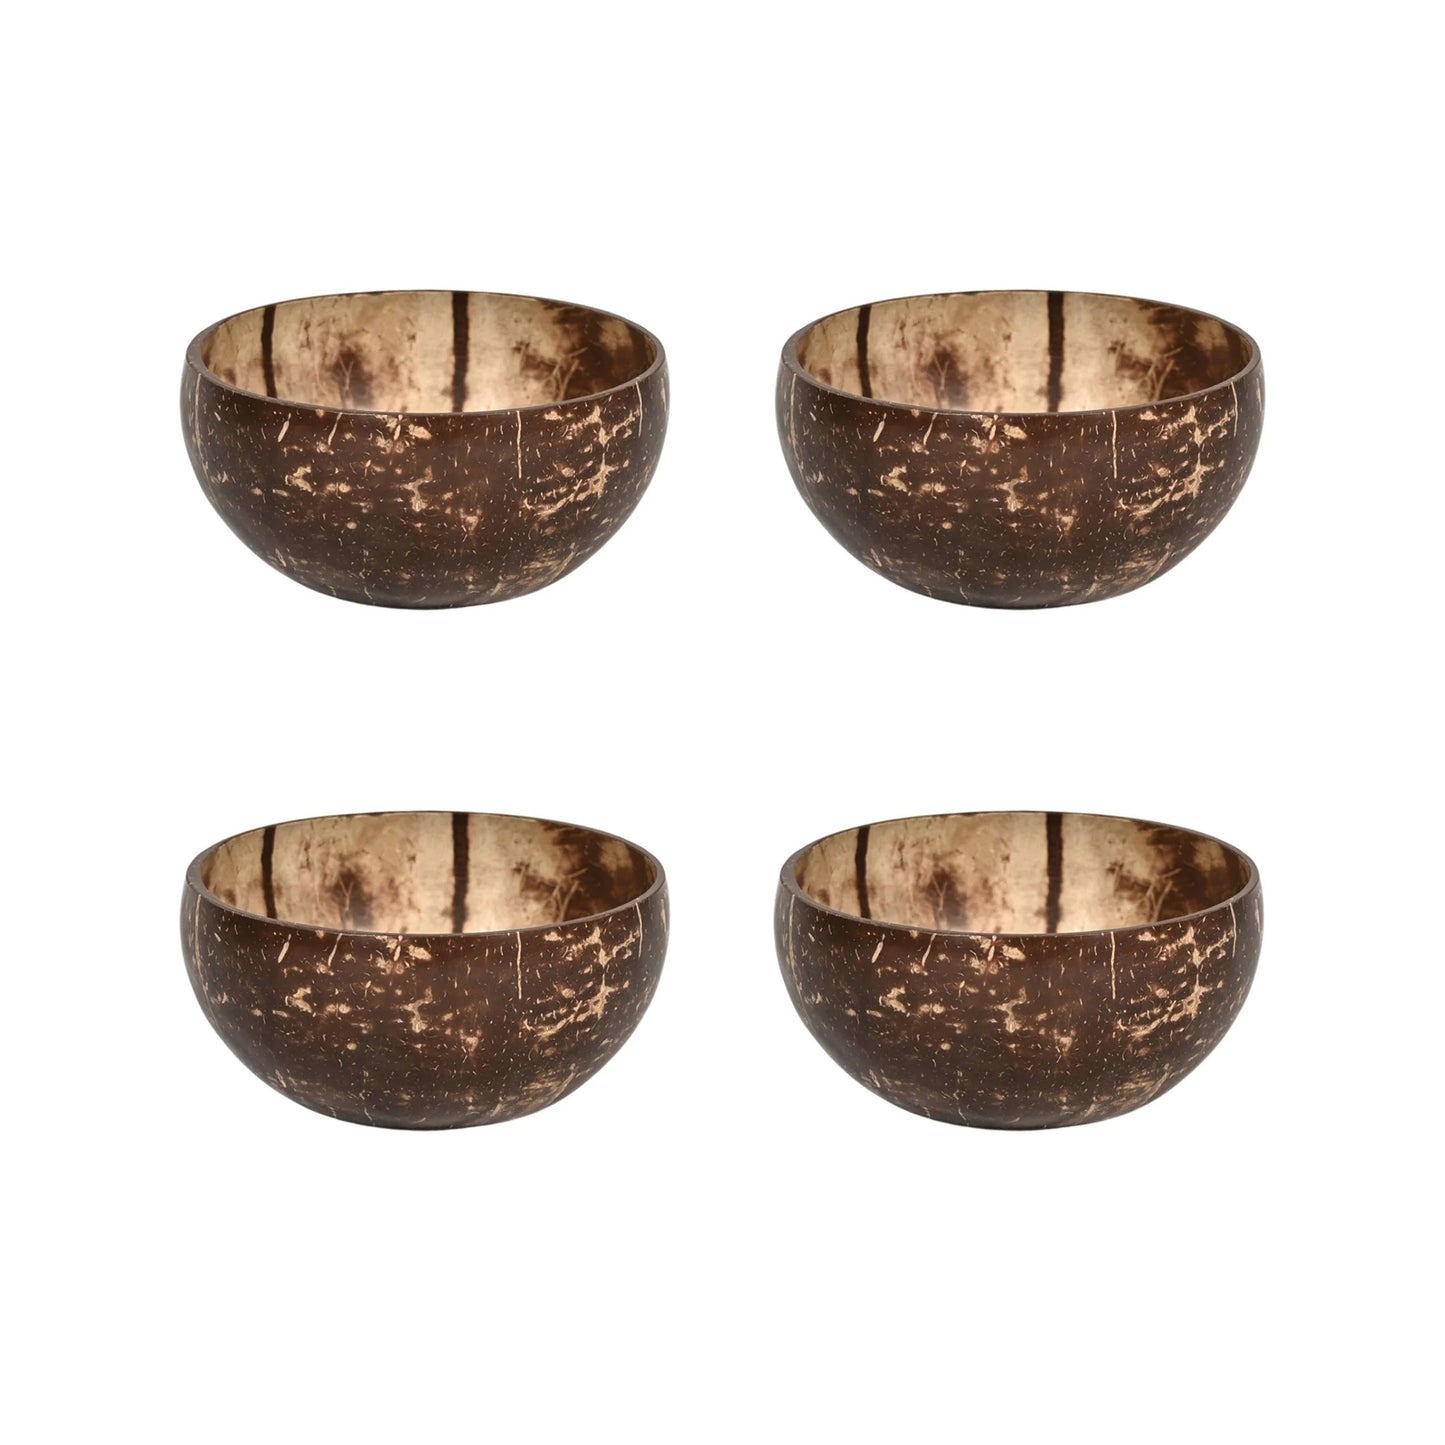 Coconut Bowls